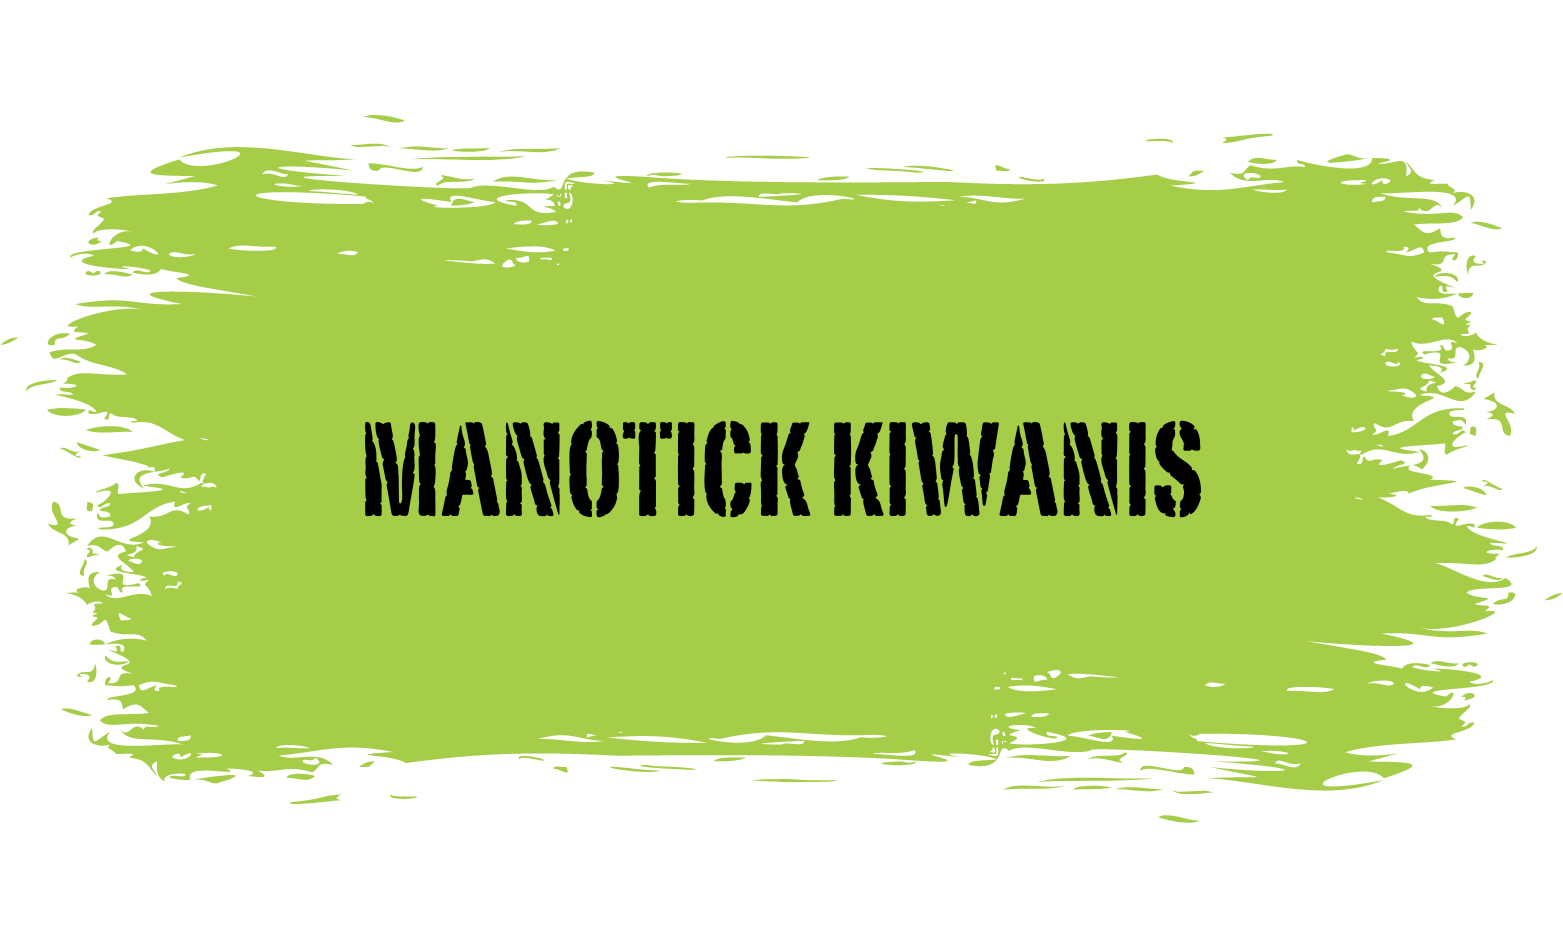 Manotick Kiwanis